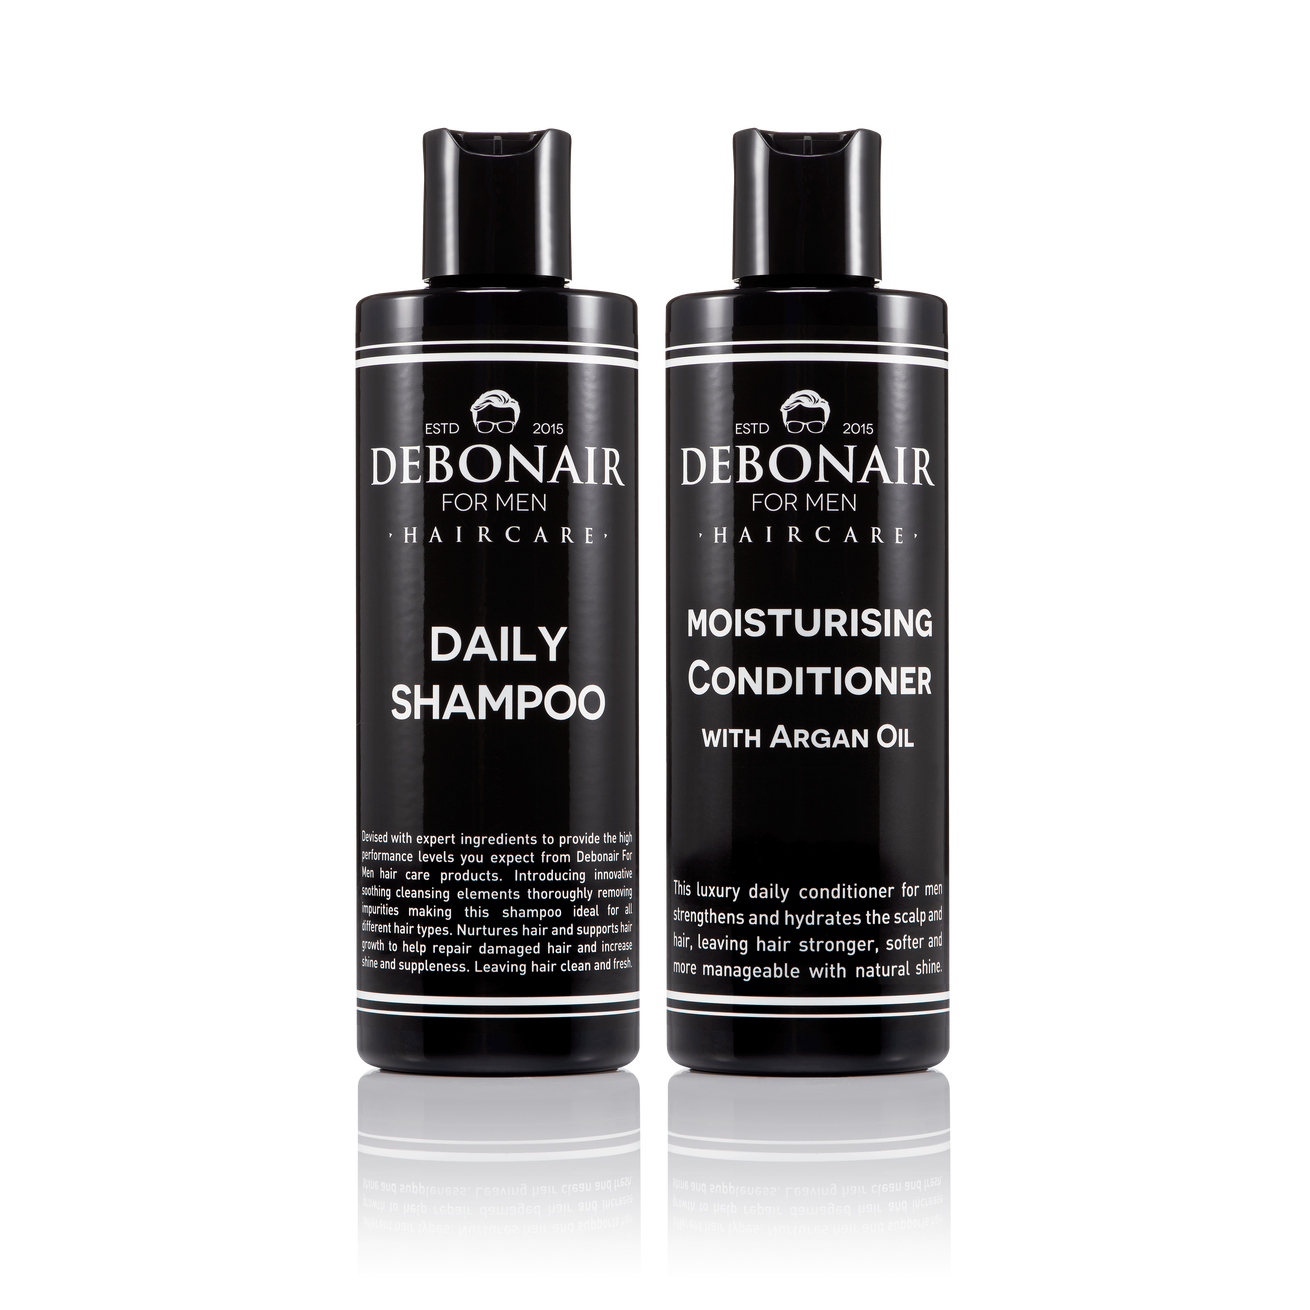 Daily Shampoo and Moisturising Conditioner - Debonair for Men